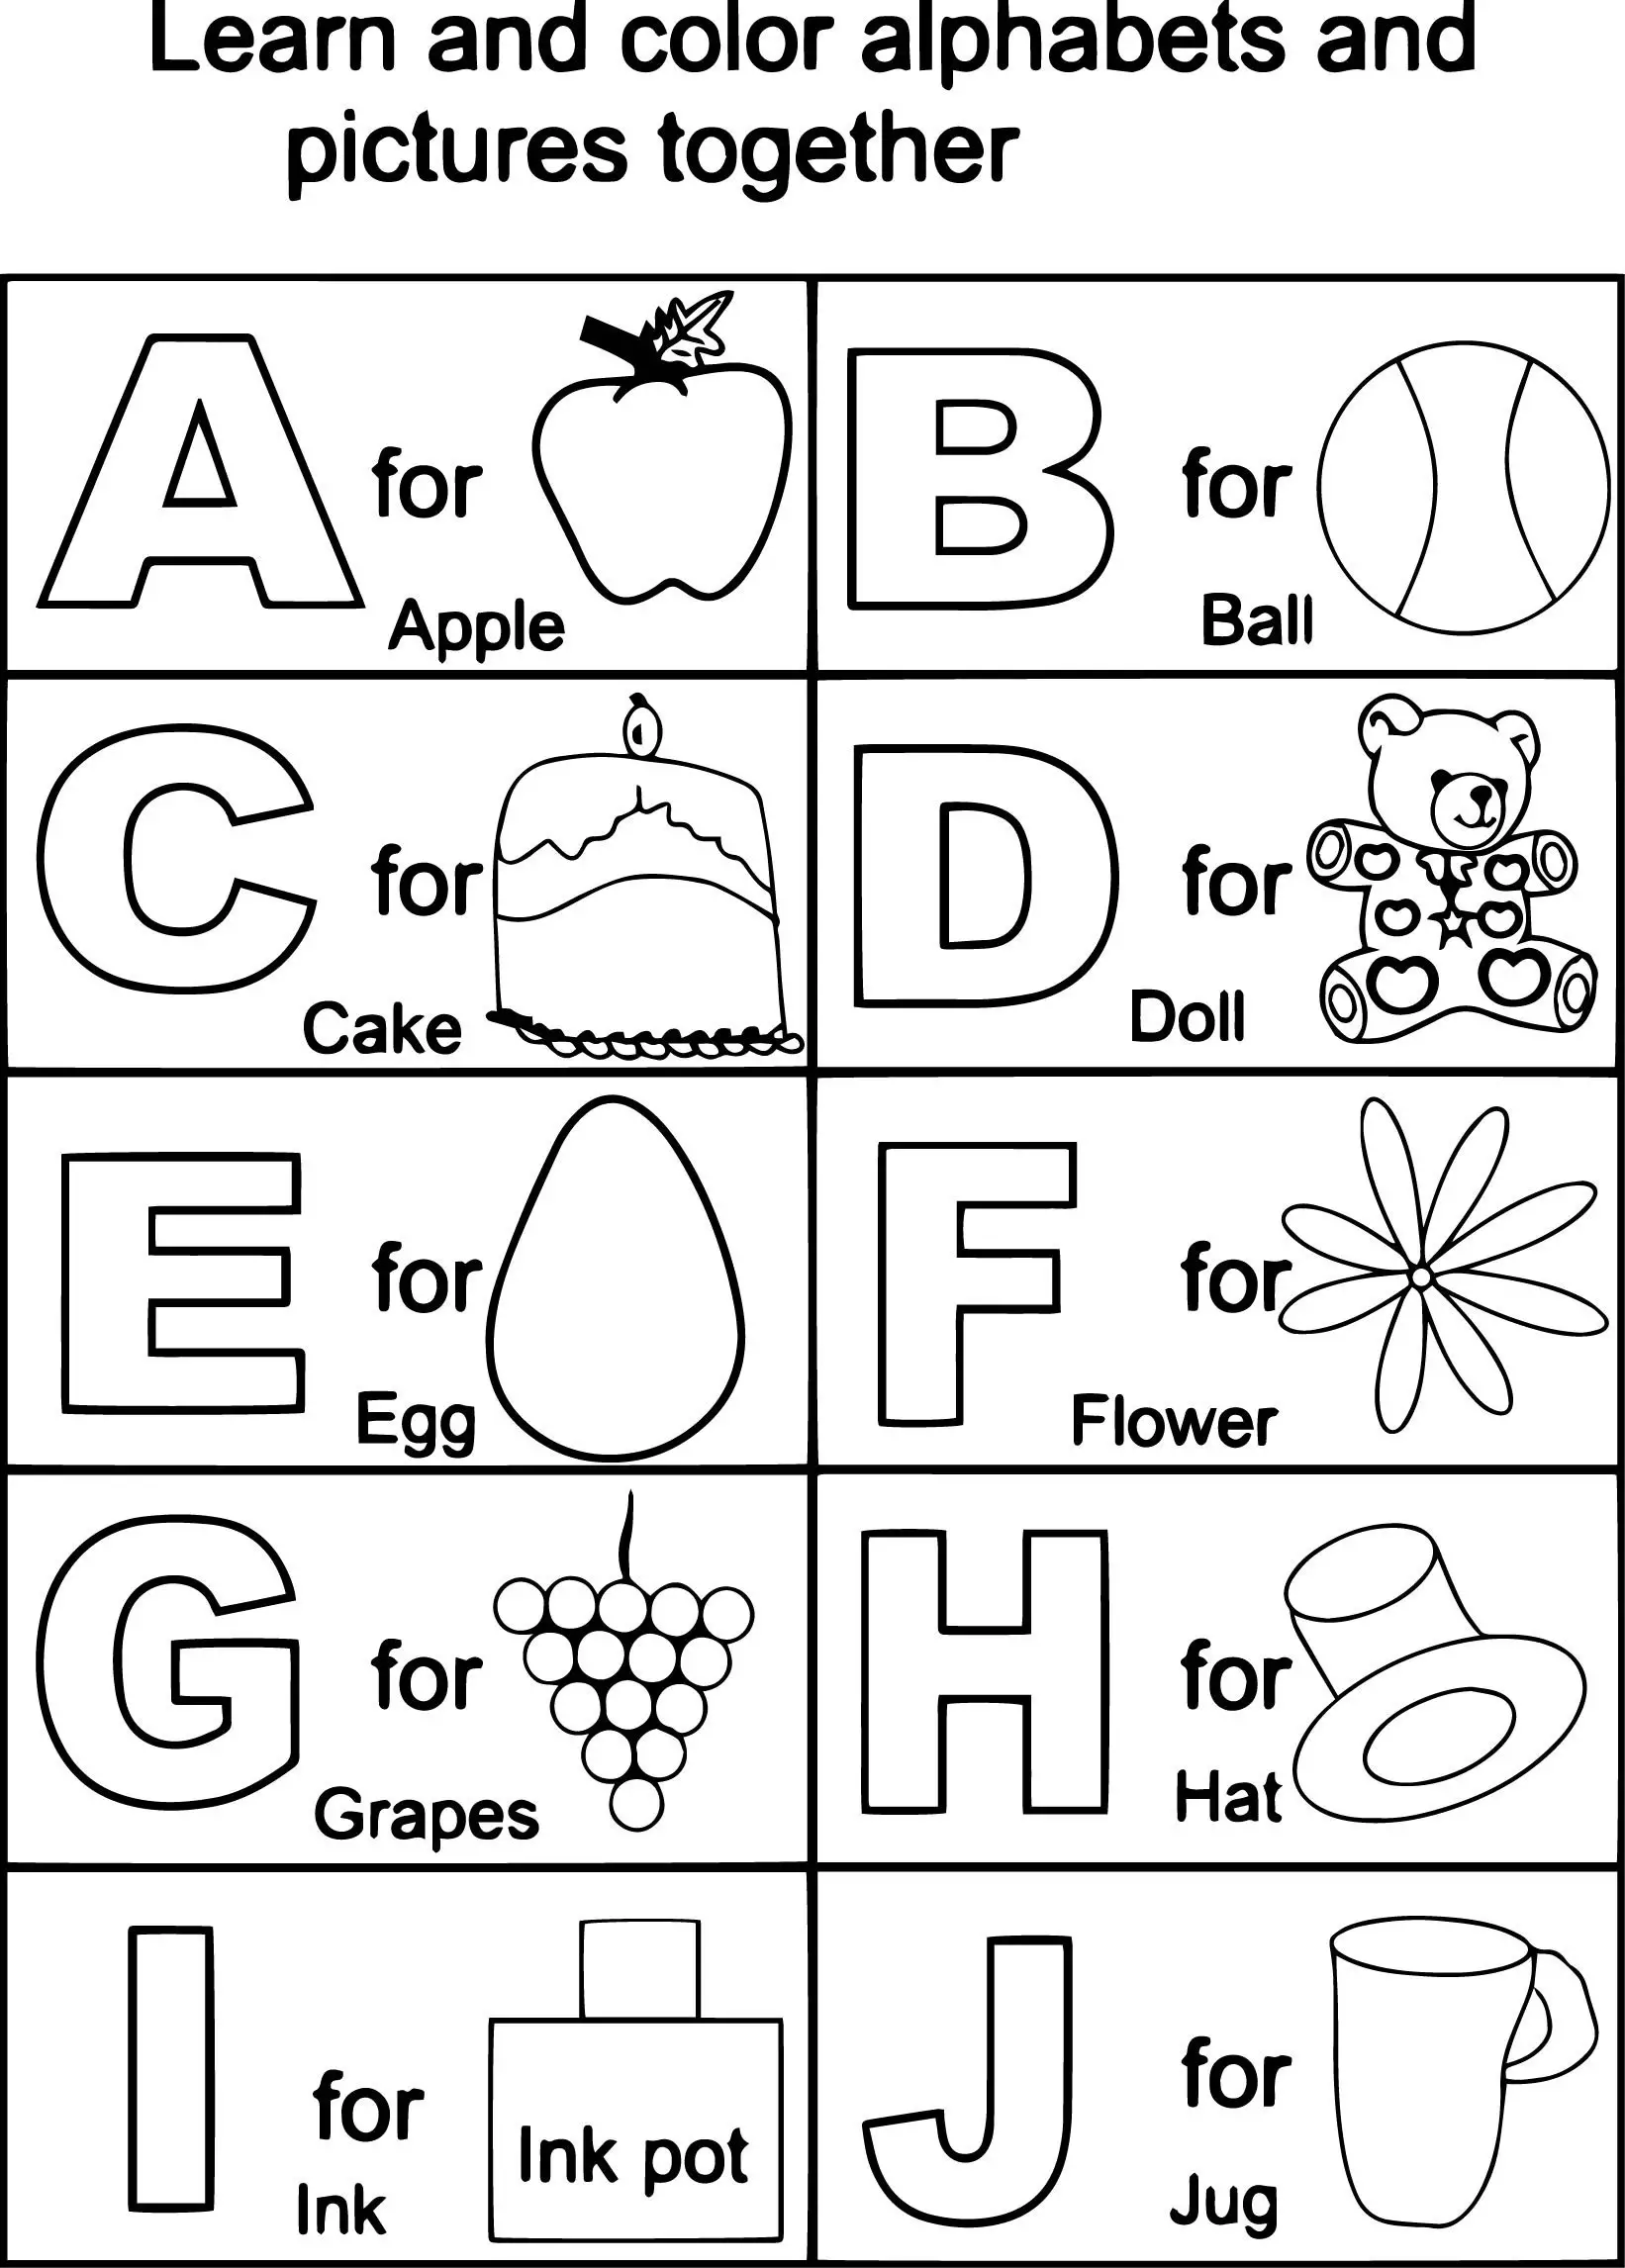 21-preschool-coloring-pages-alphabet-homecolor-homecolor